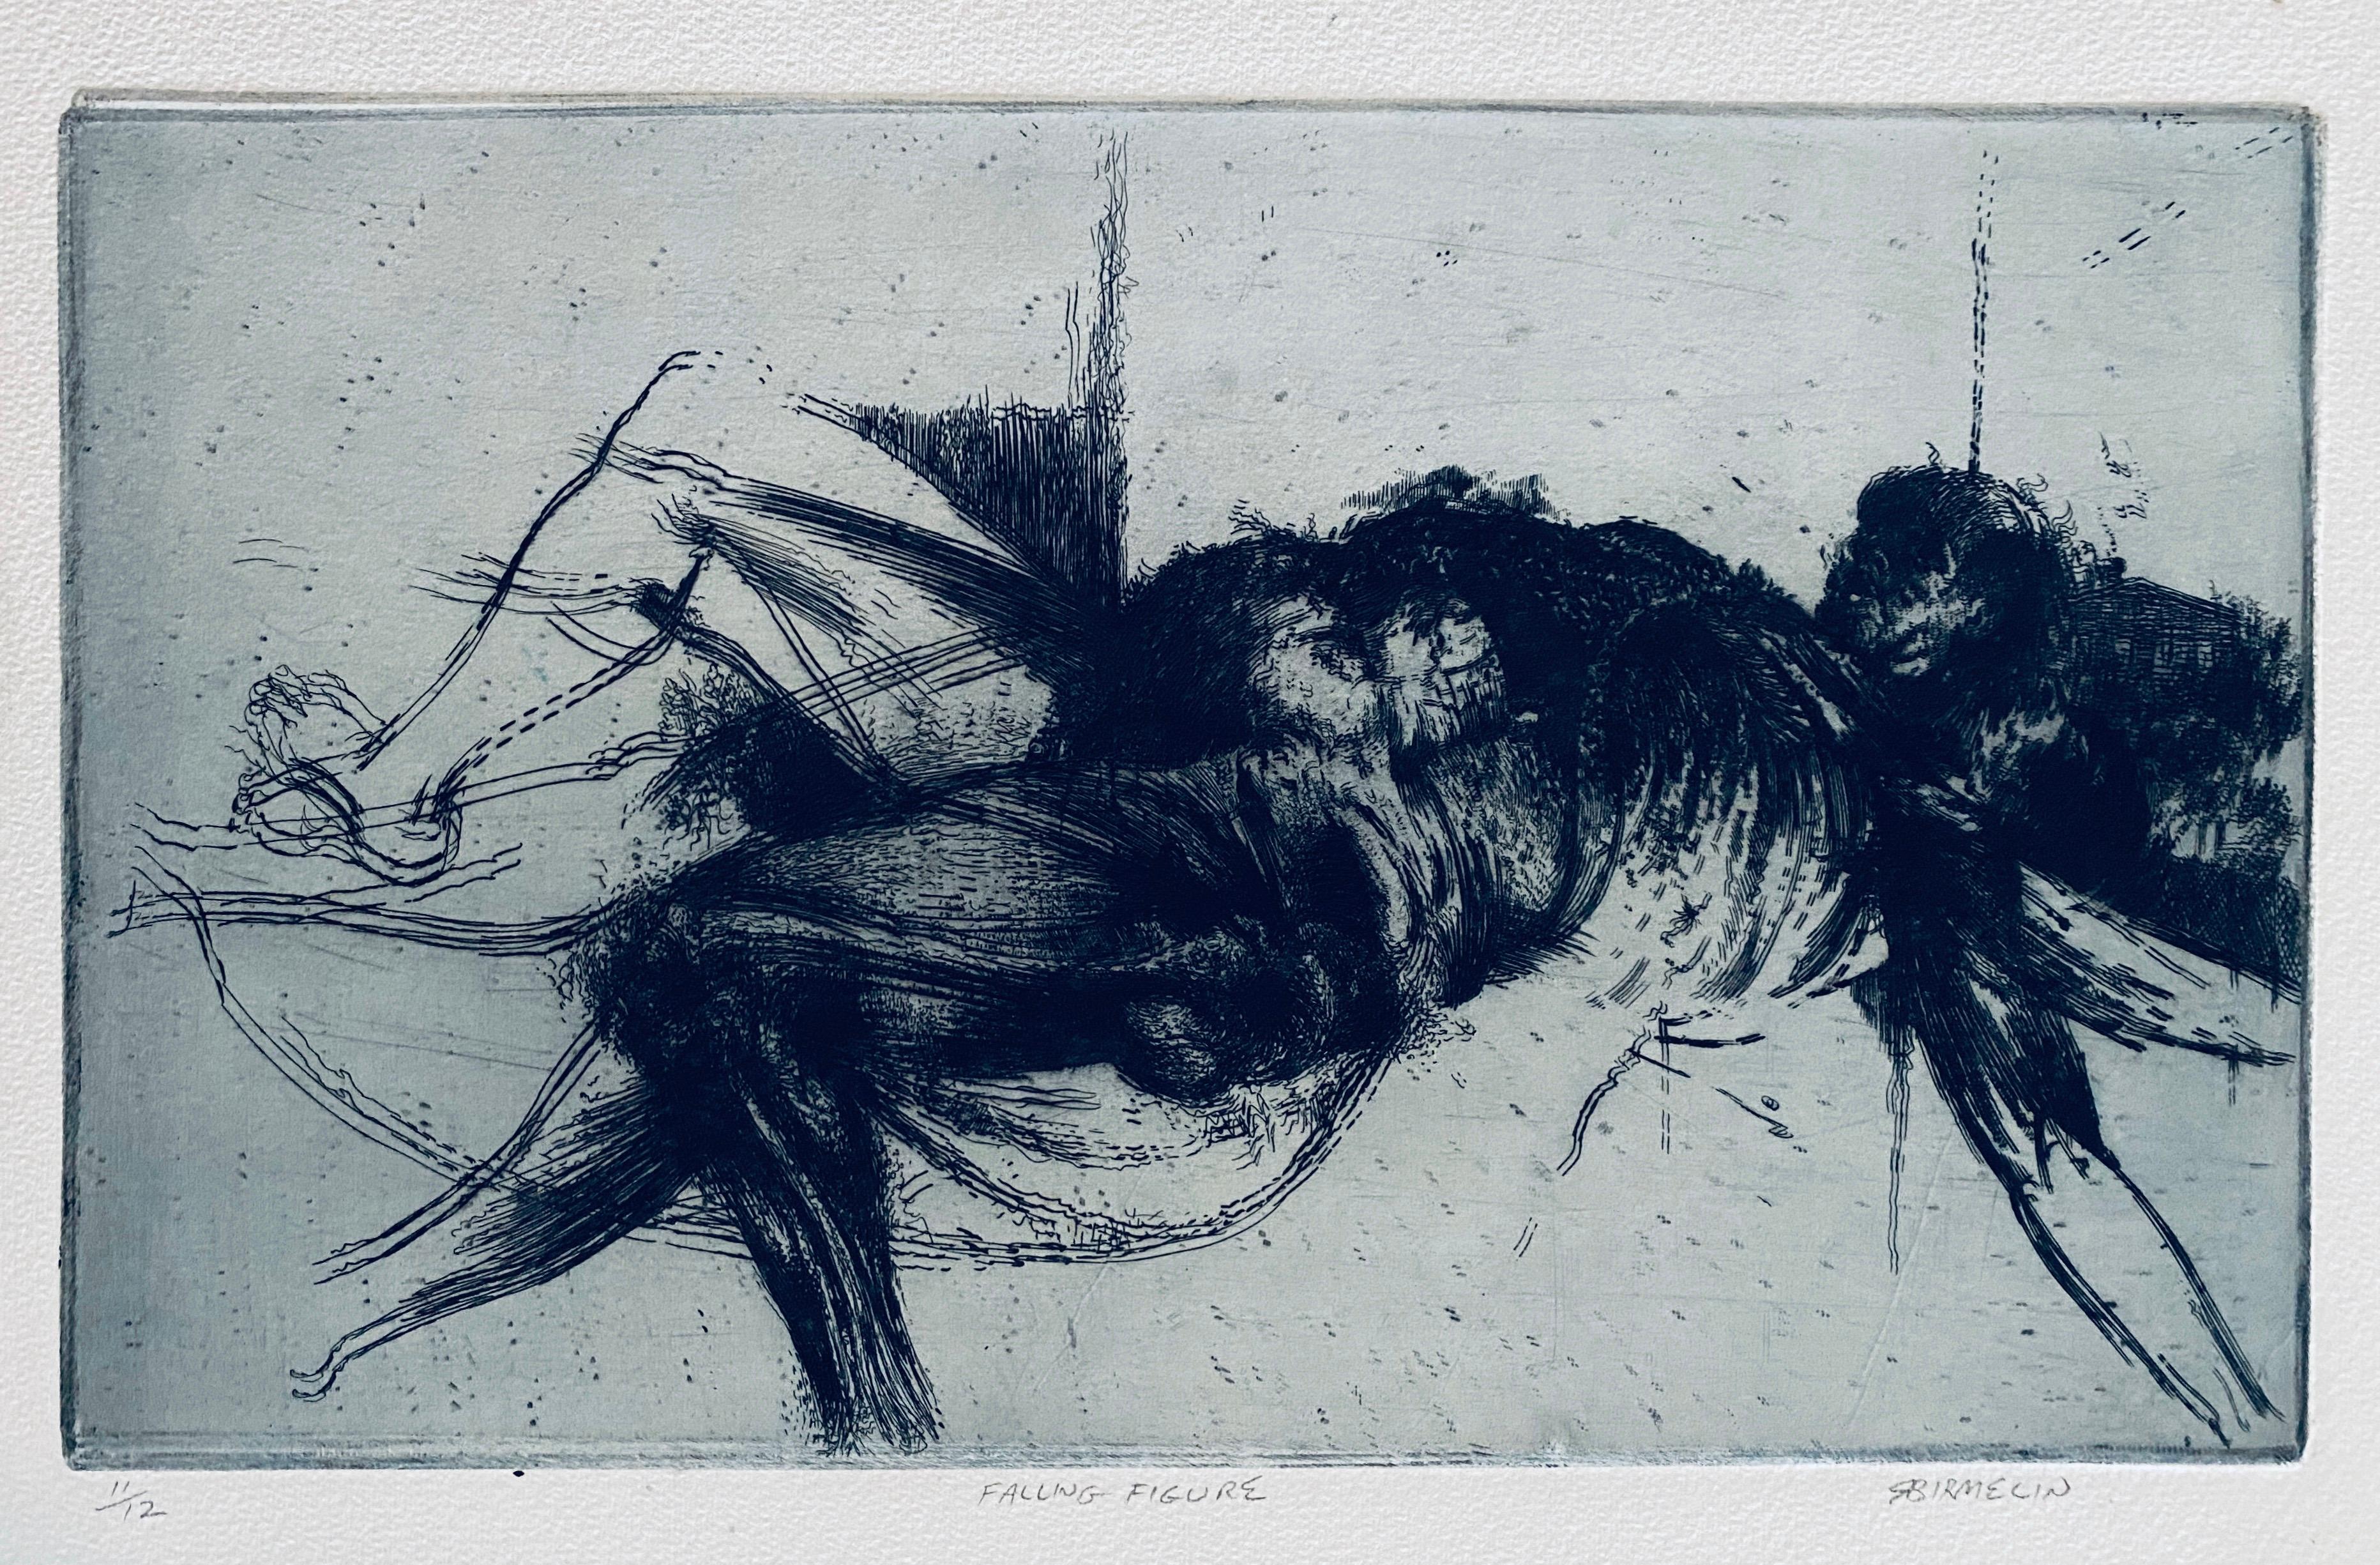 Figure tombée, gravure abstraite moderniste américaine - Print de Robert A. Birmelin